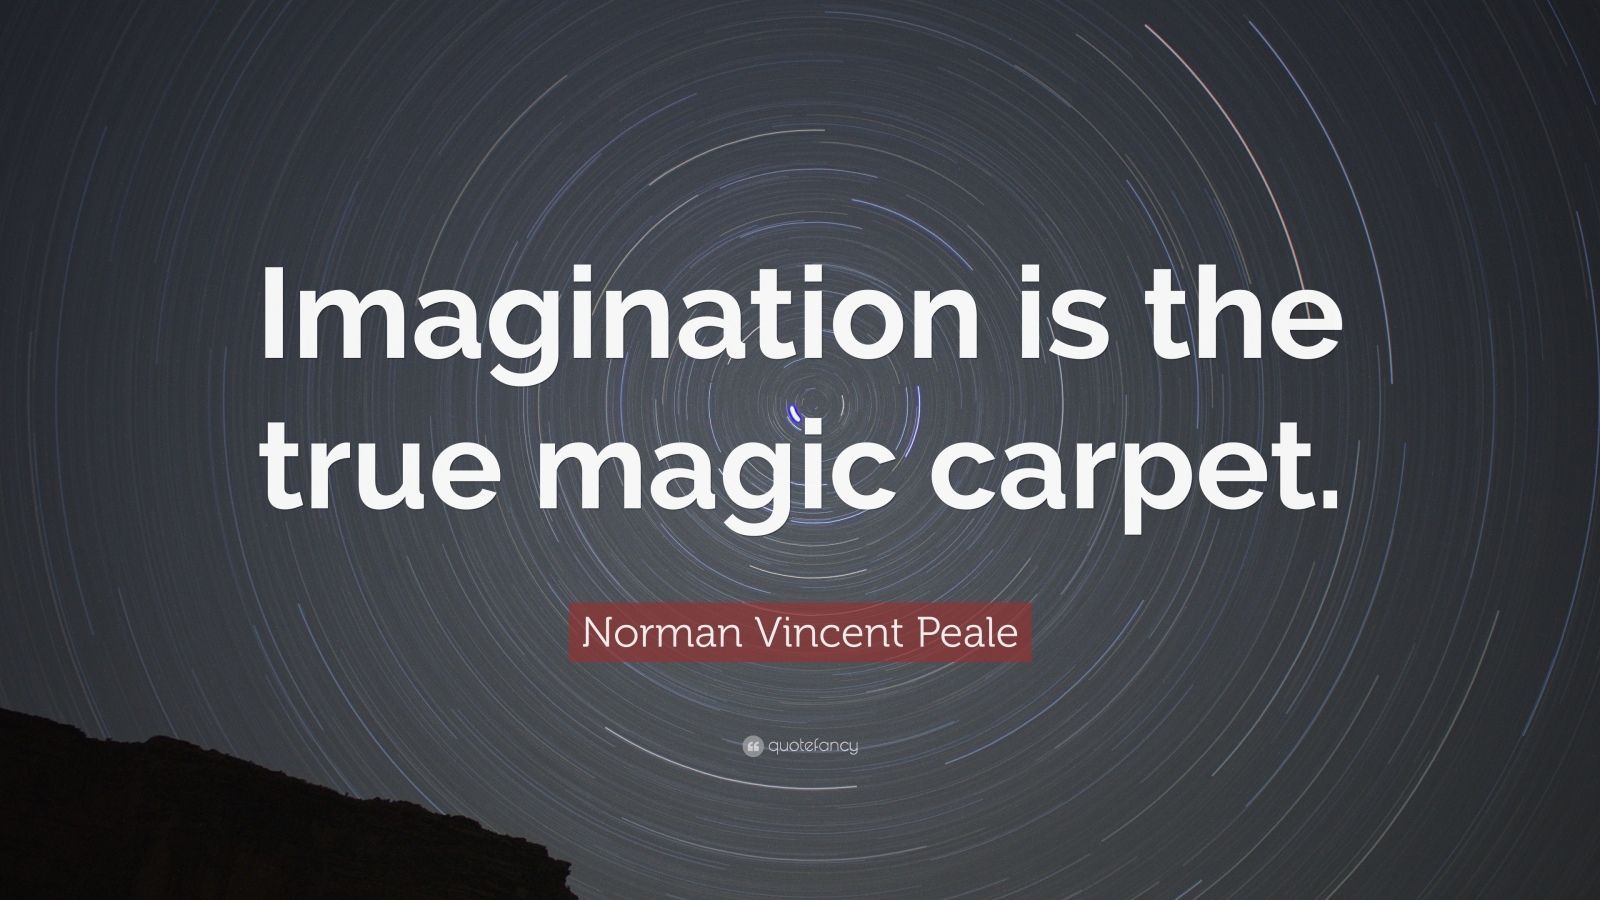 Norman Vincent Peale Quote: “Imagination is the true magic carpet